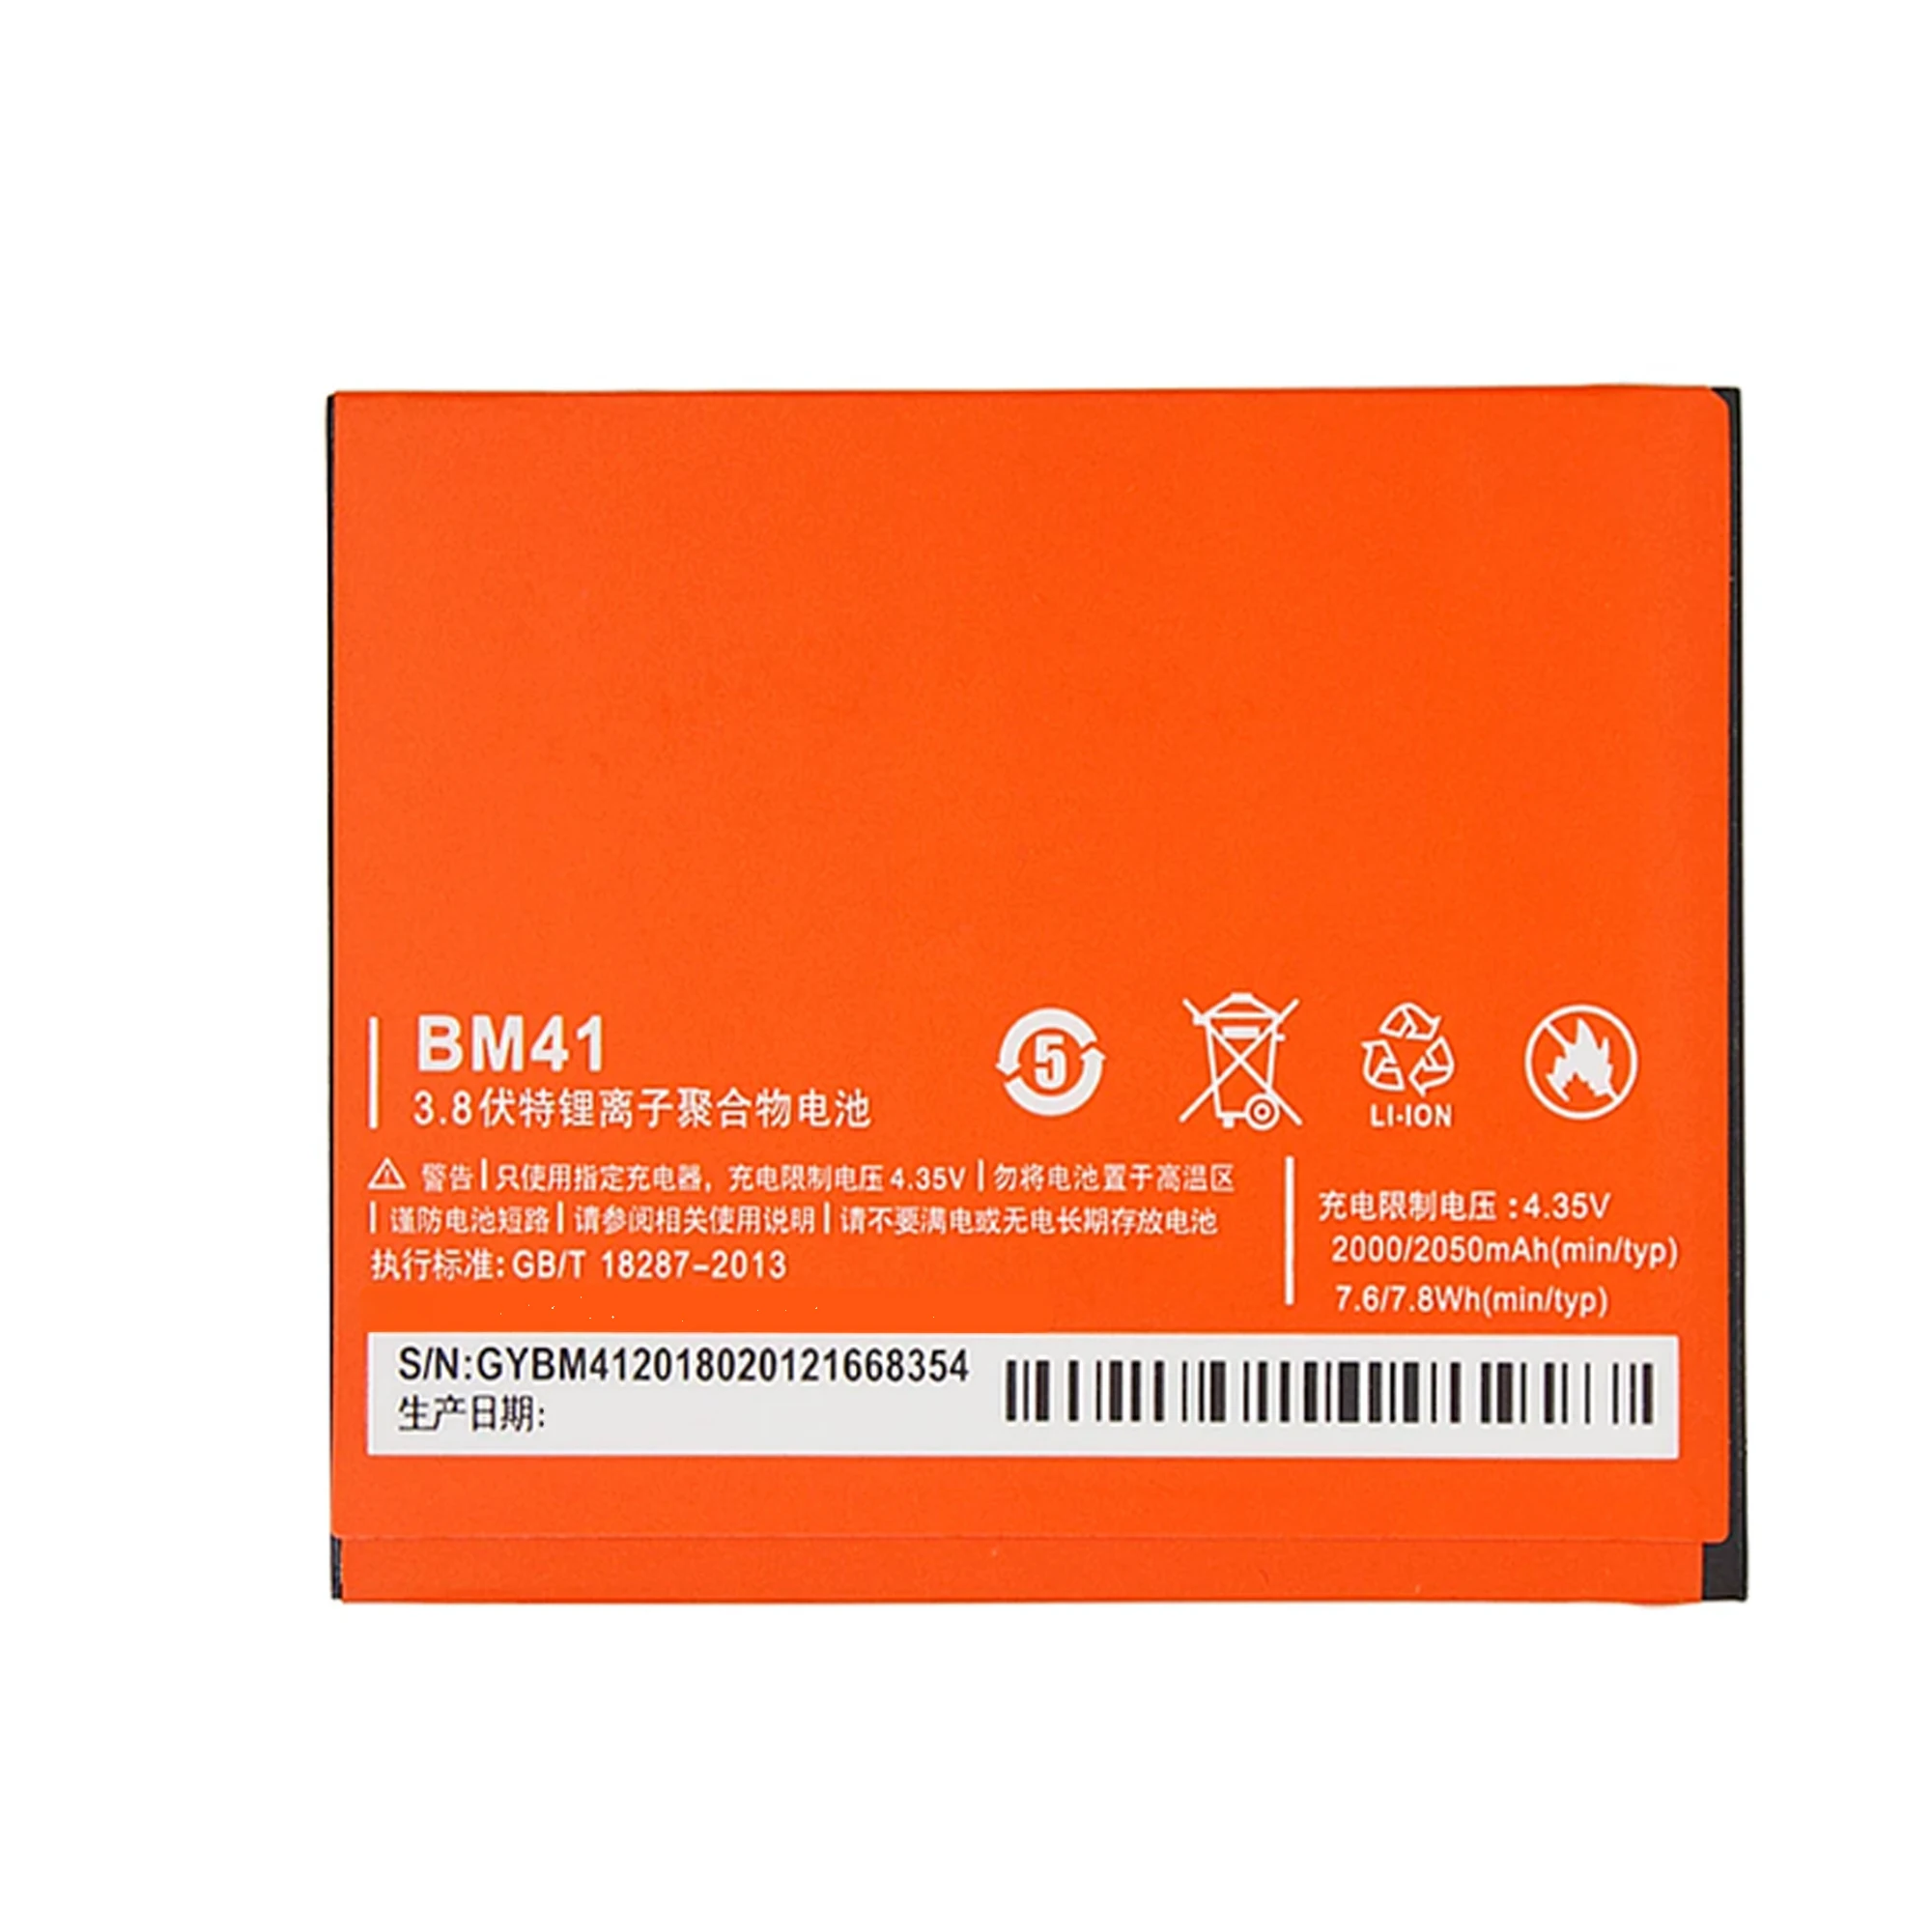 Xiao Mi Xiaomi BM41 Phone Battery For Xiao mi Redmi 1S  Redmi2A Redmi 2  BM41 Original Replacement Battery Batteries Bateria enlarge